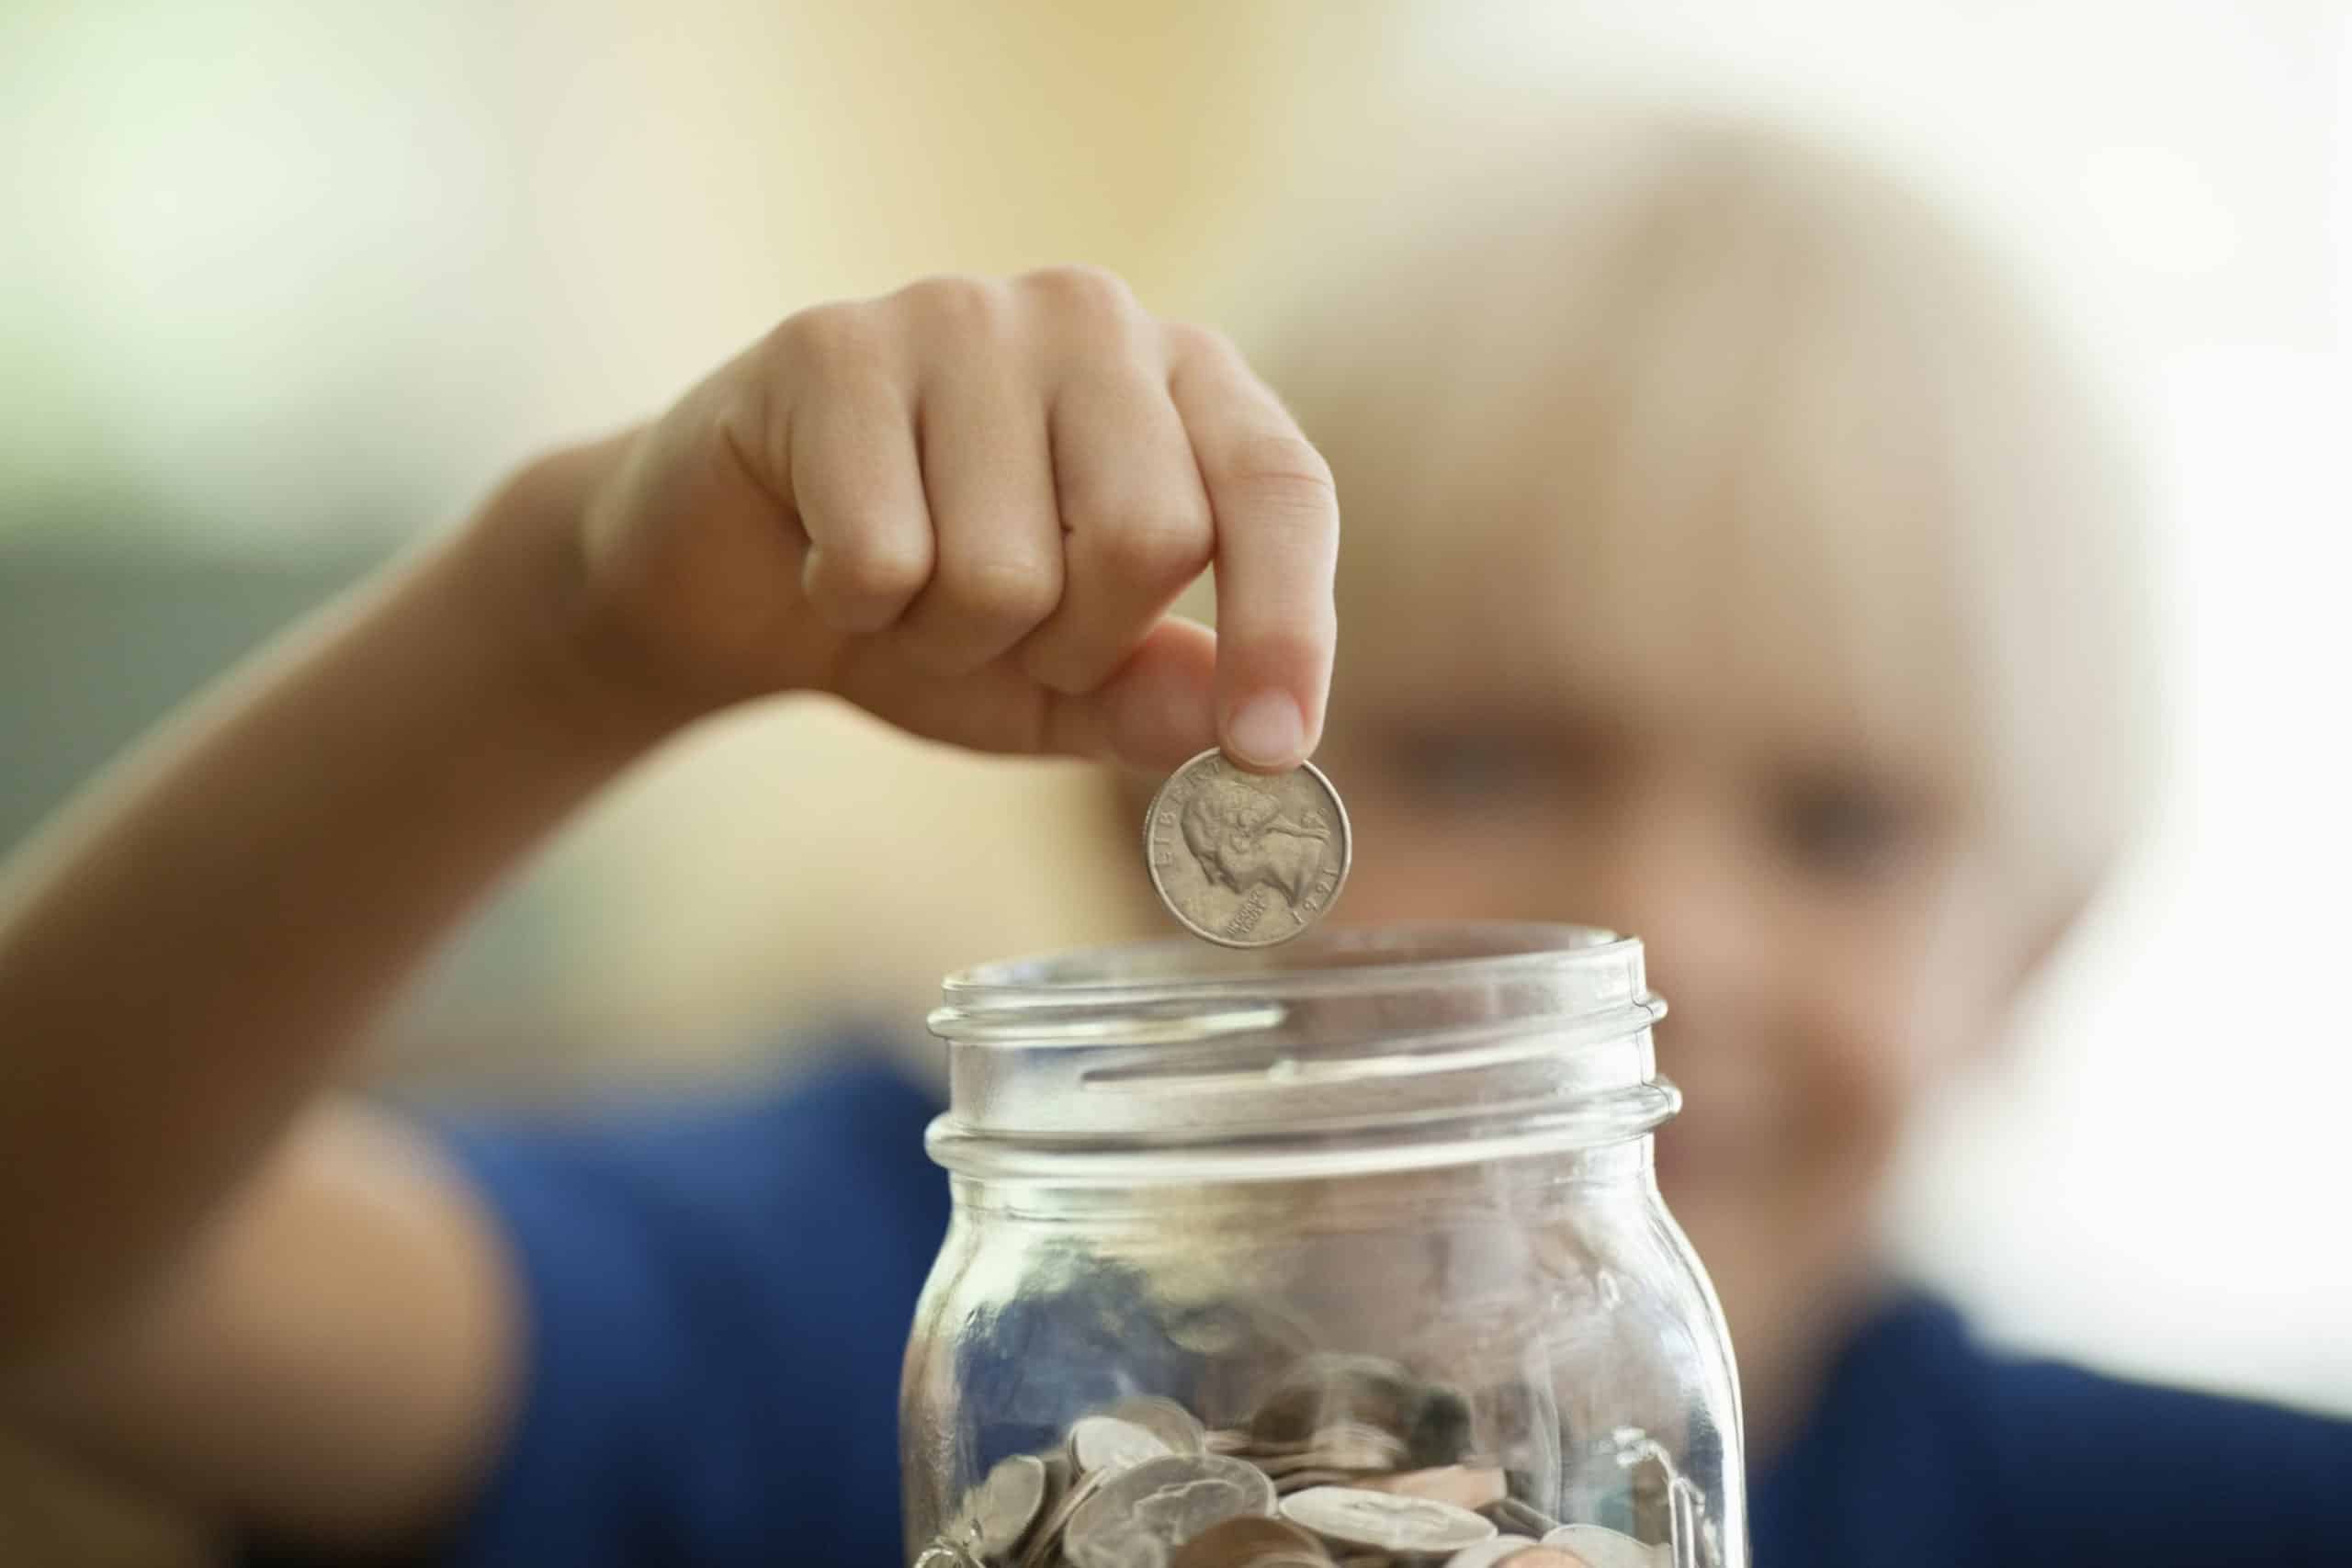 Young blonde boy wearing a dark blue t-shirt saving change in a glass Ball jar